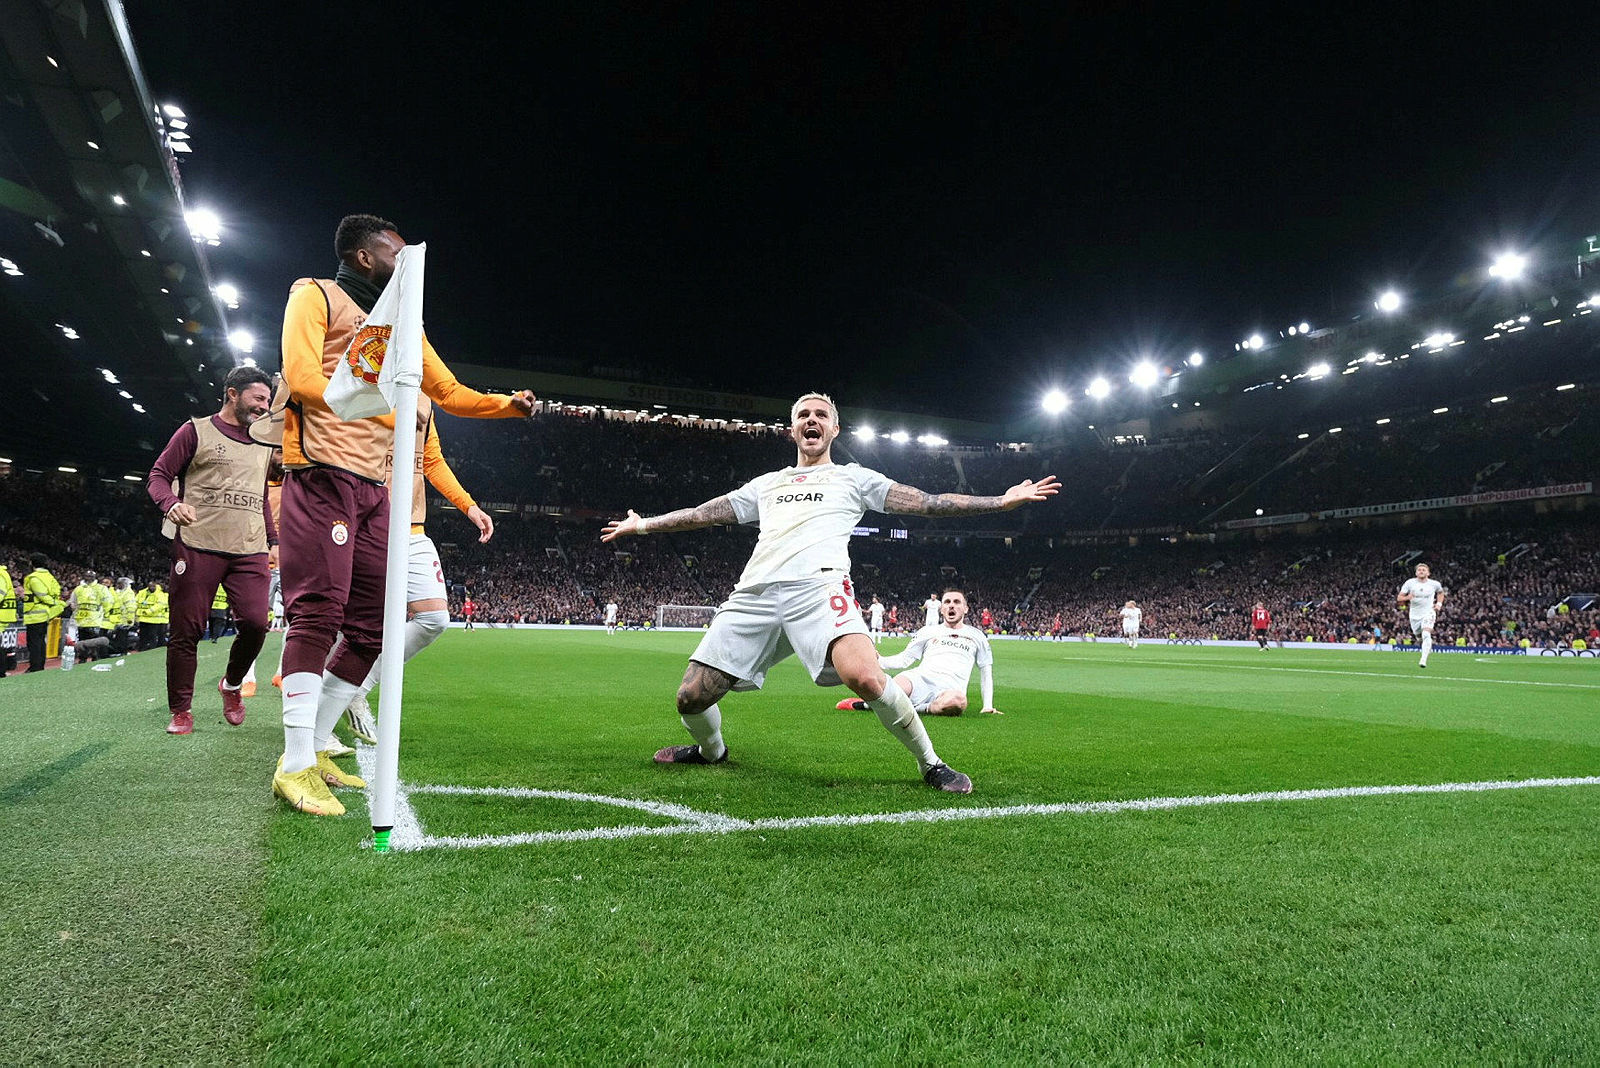 Okan Buruk’tan radikal karar! İşte Galatasaray’ın Manchester United maçı 11’i